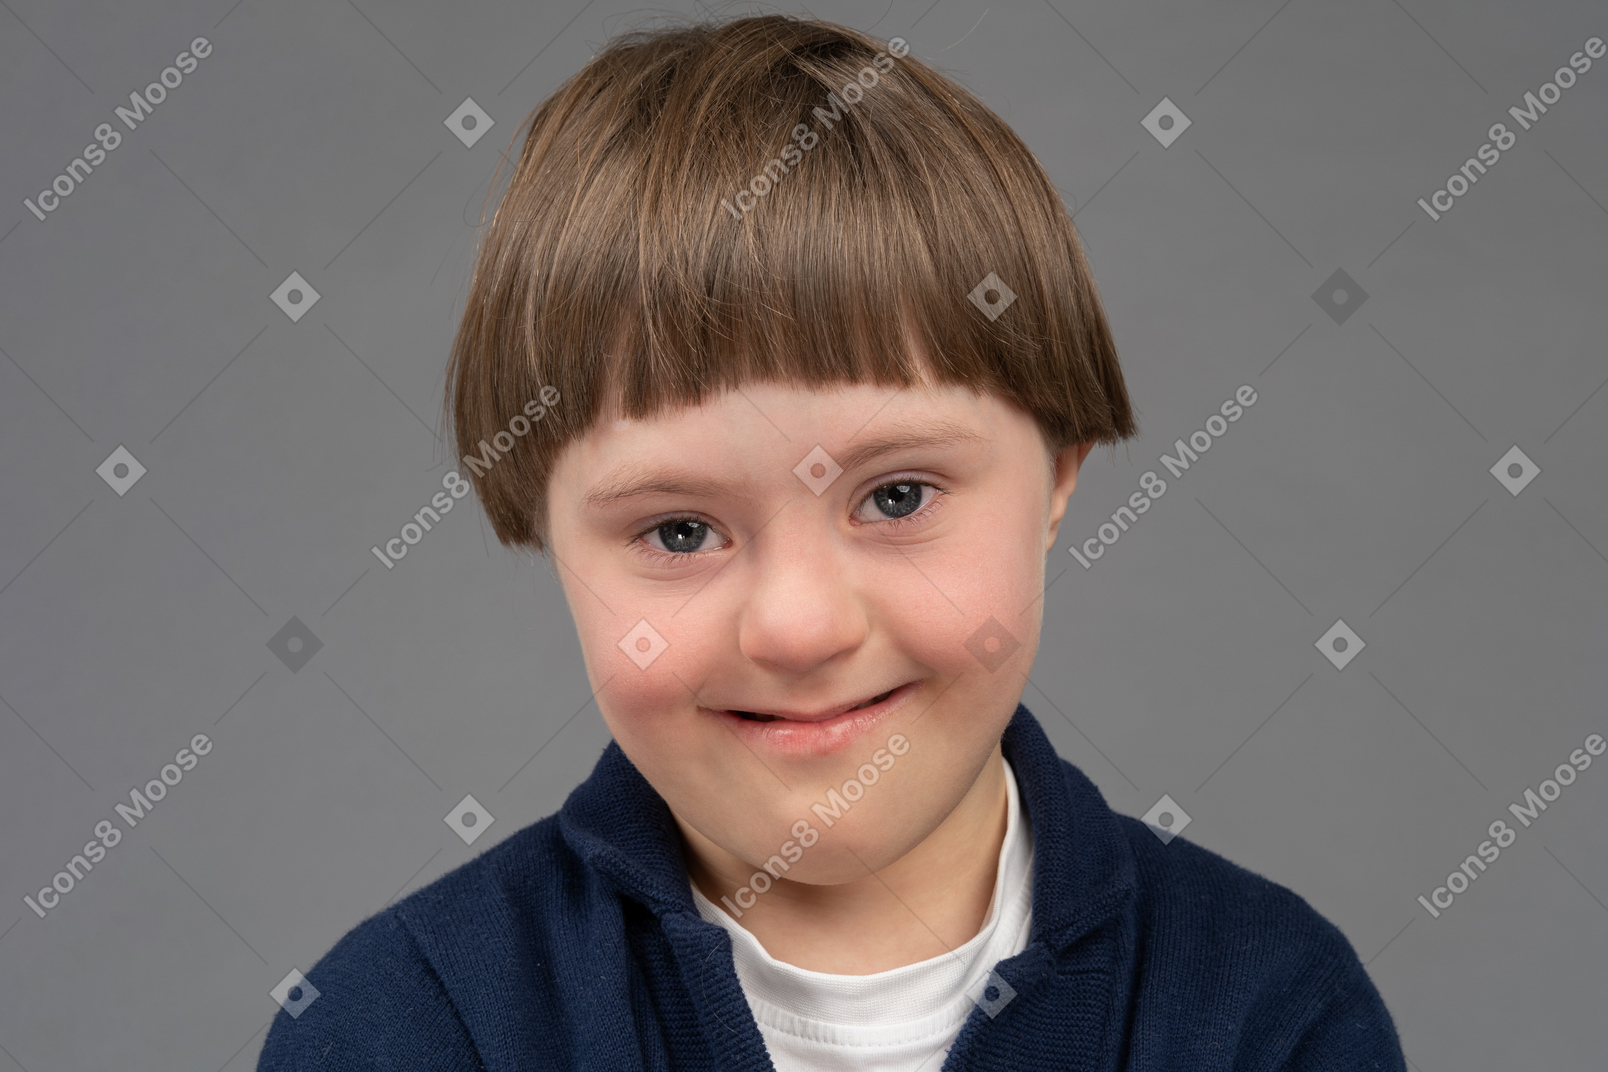 Headshot of a little boy smiling